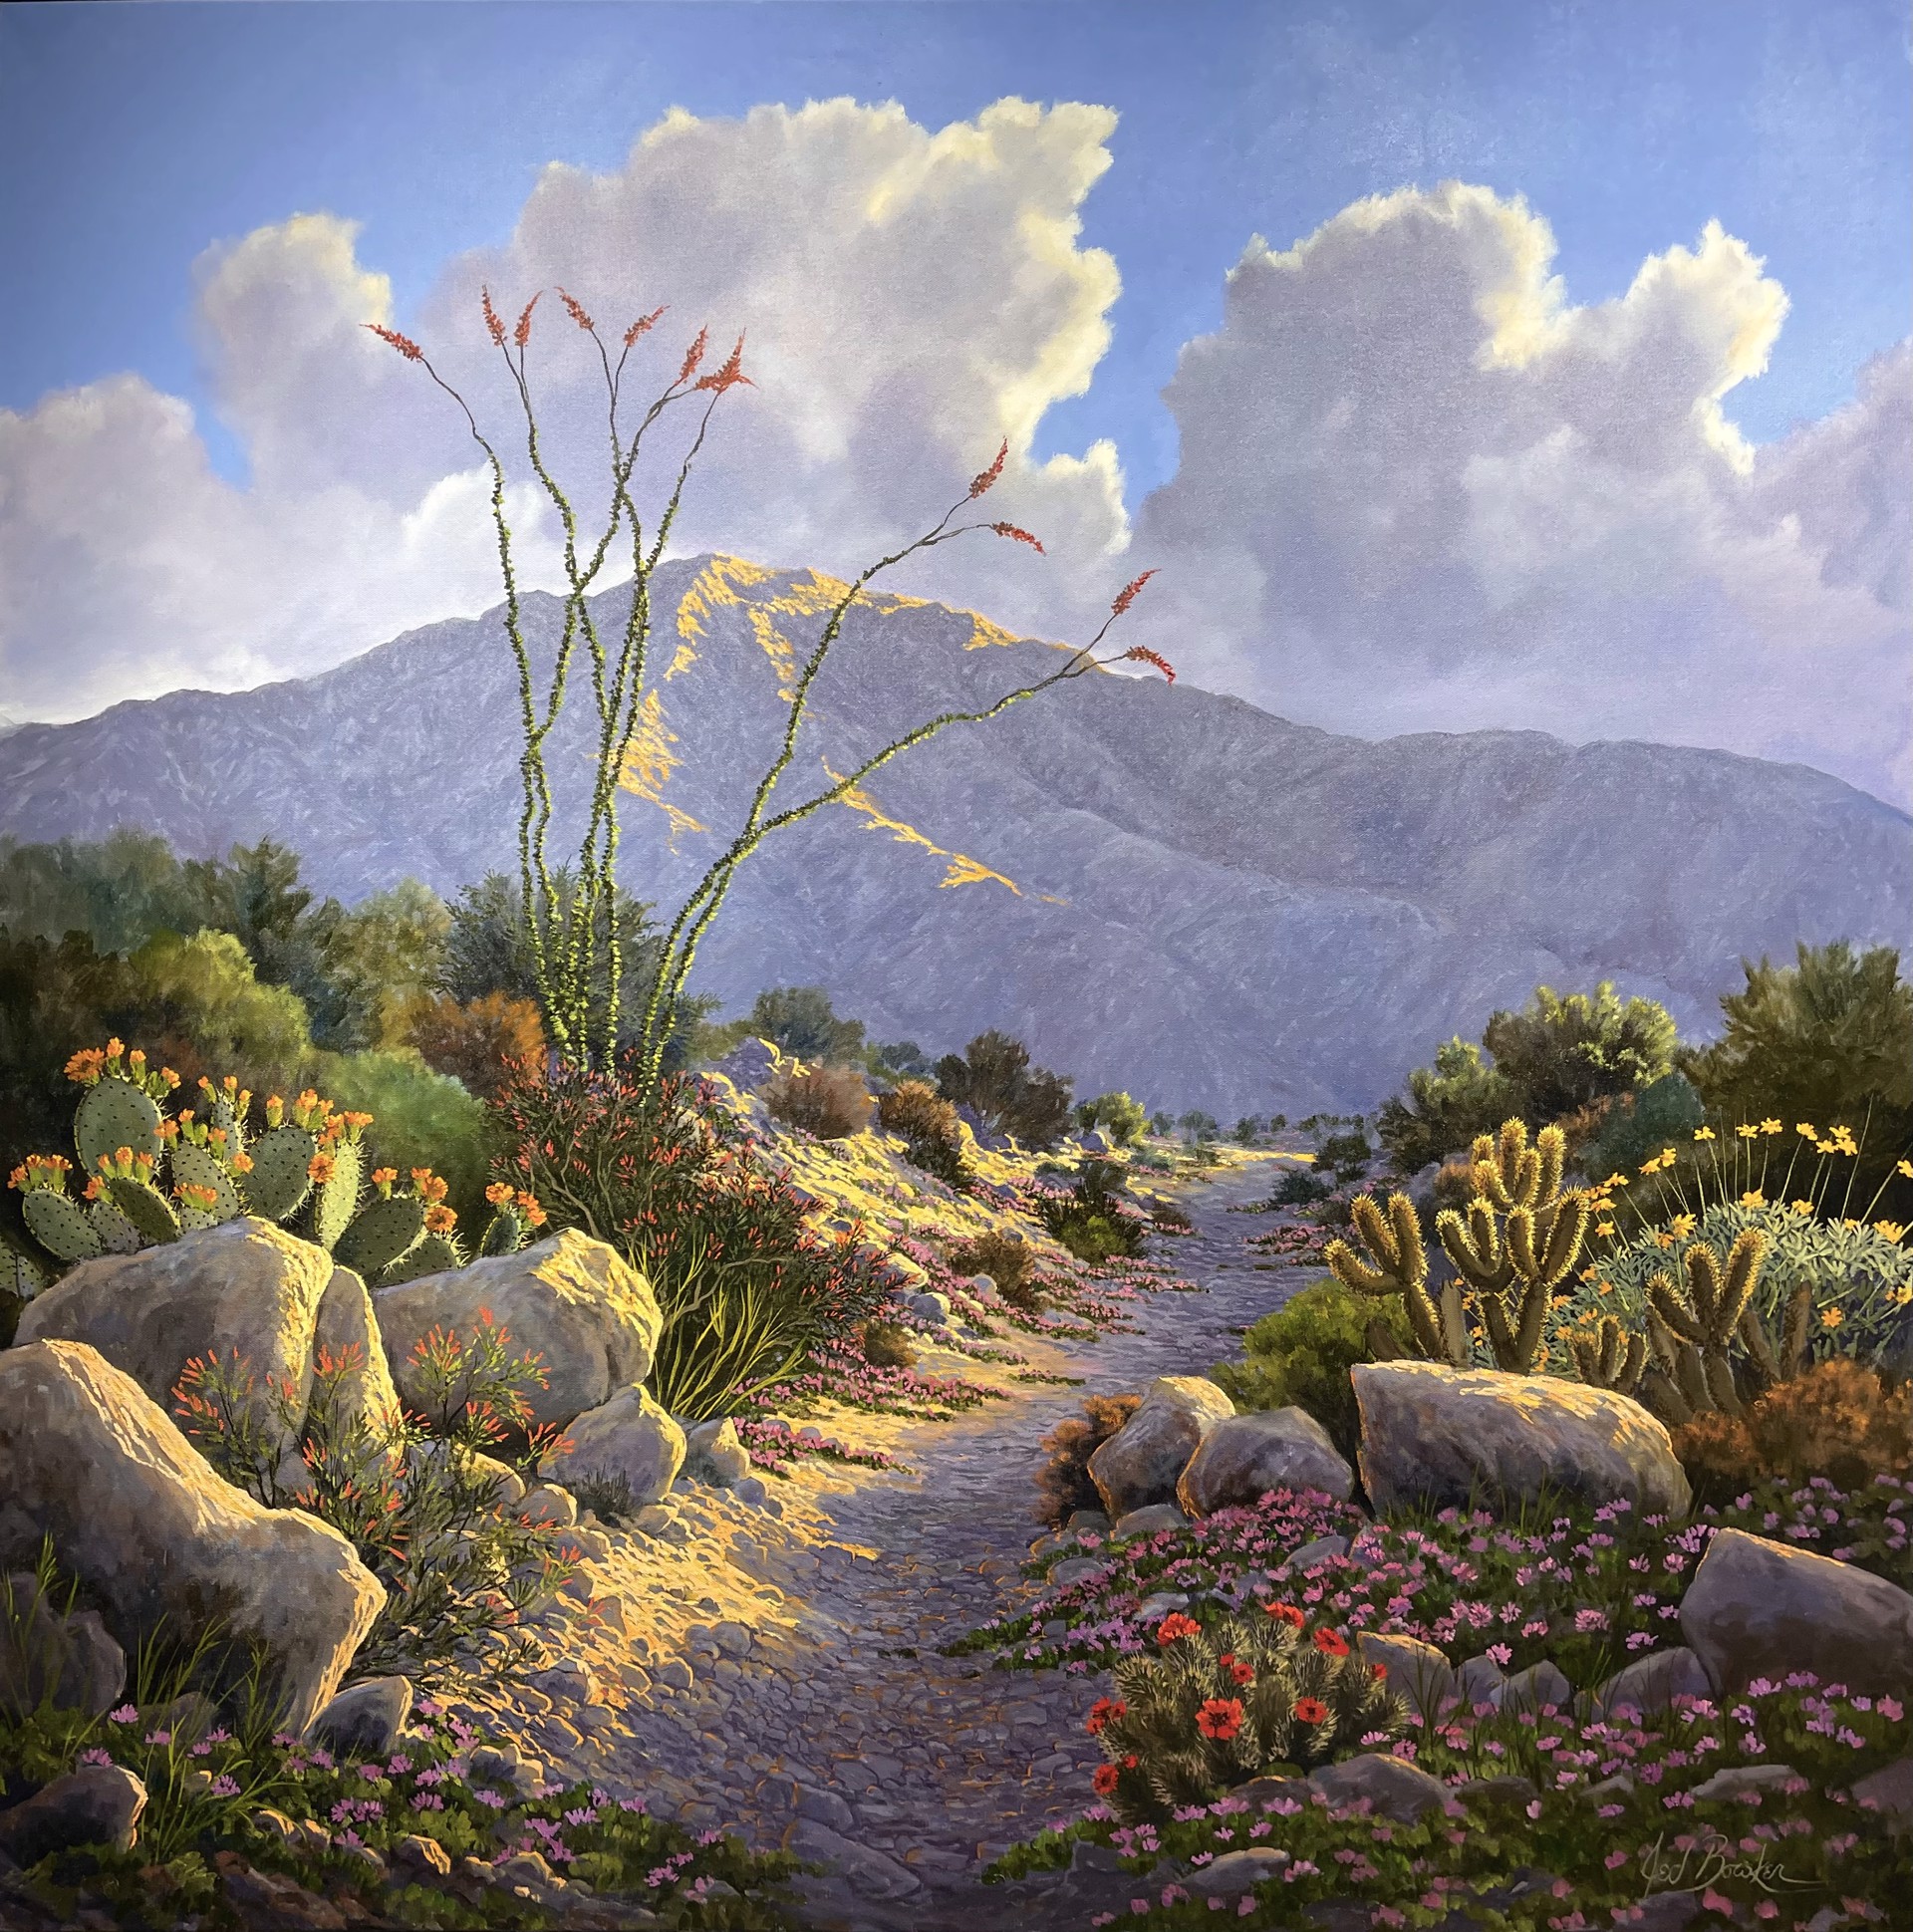 Desert Blooms in Golden Sunlight by Jed Bowker